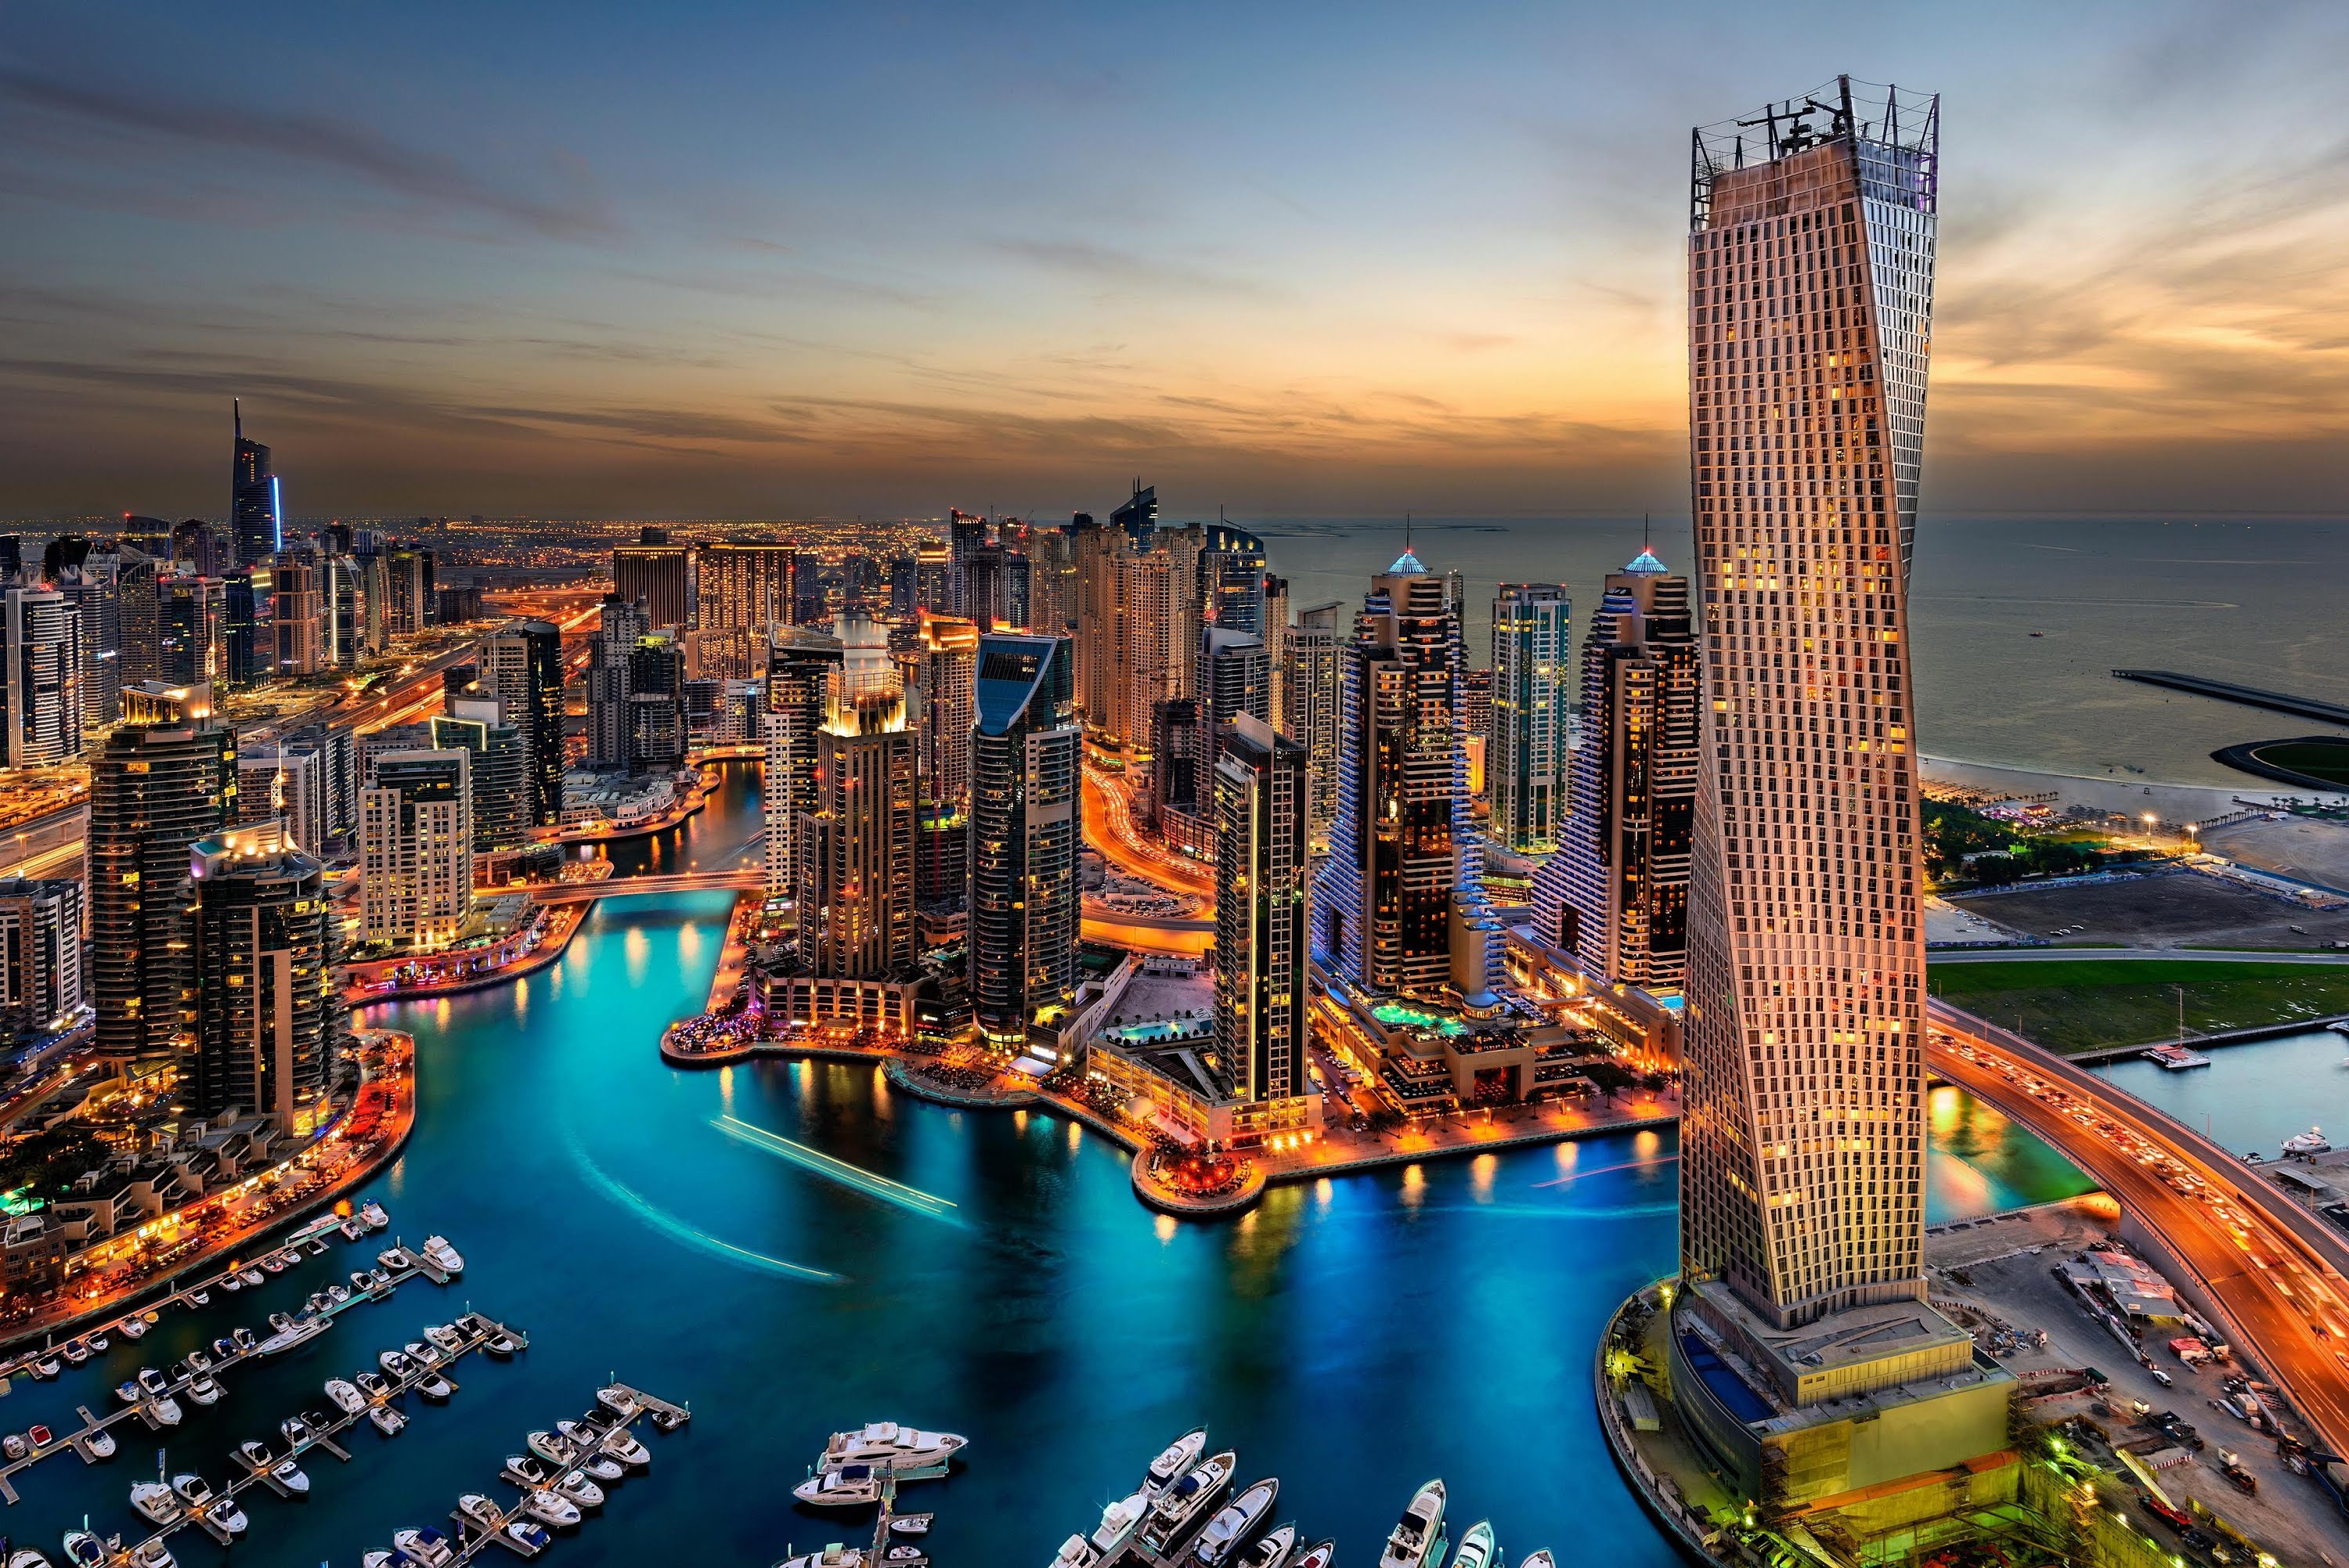 Amazing DUBAI City | Travel to Dubai HD - YouTube